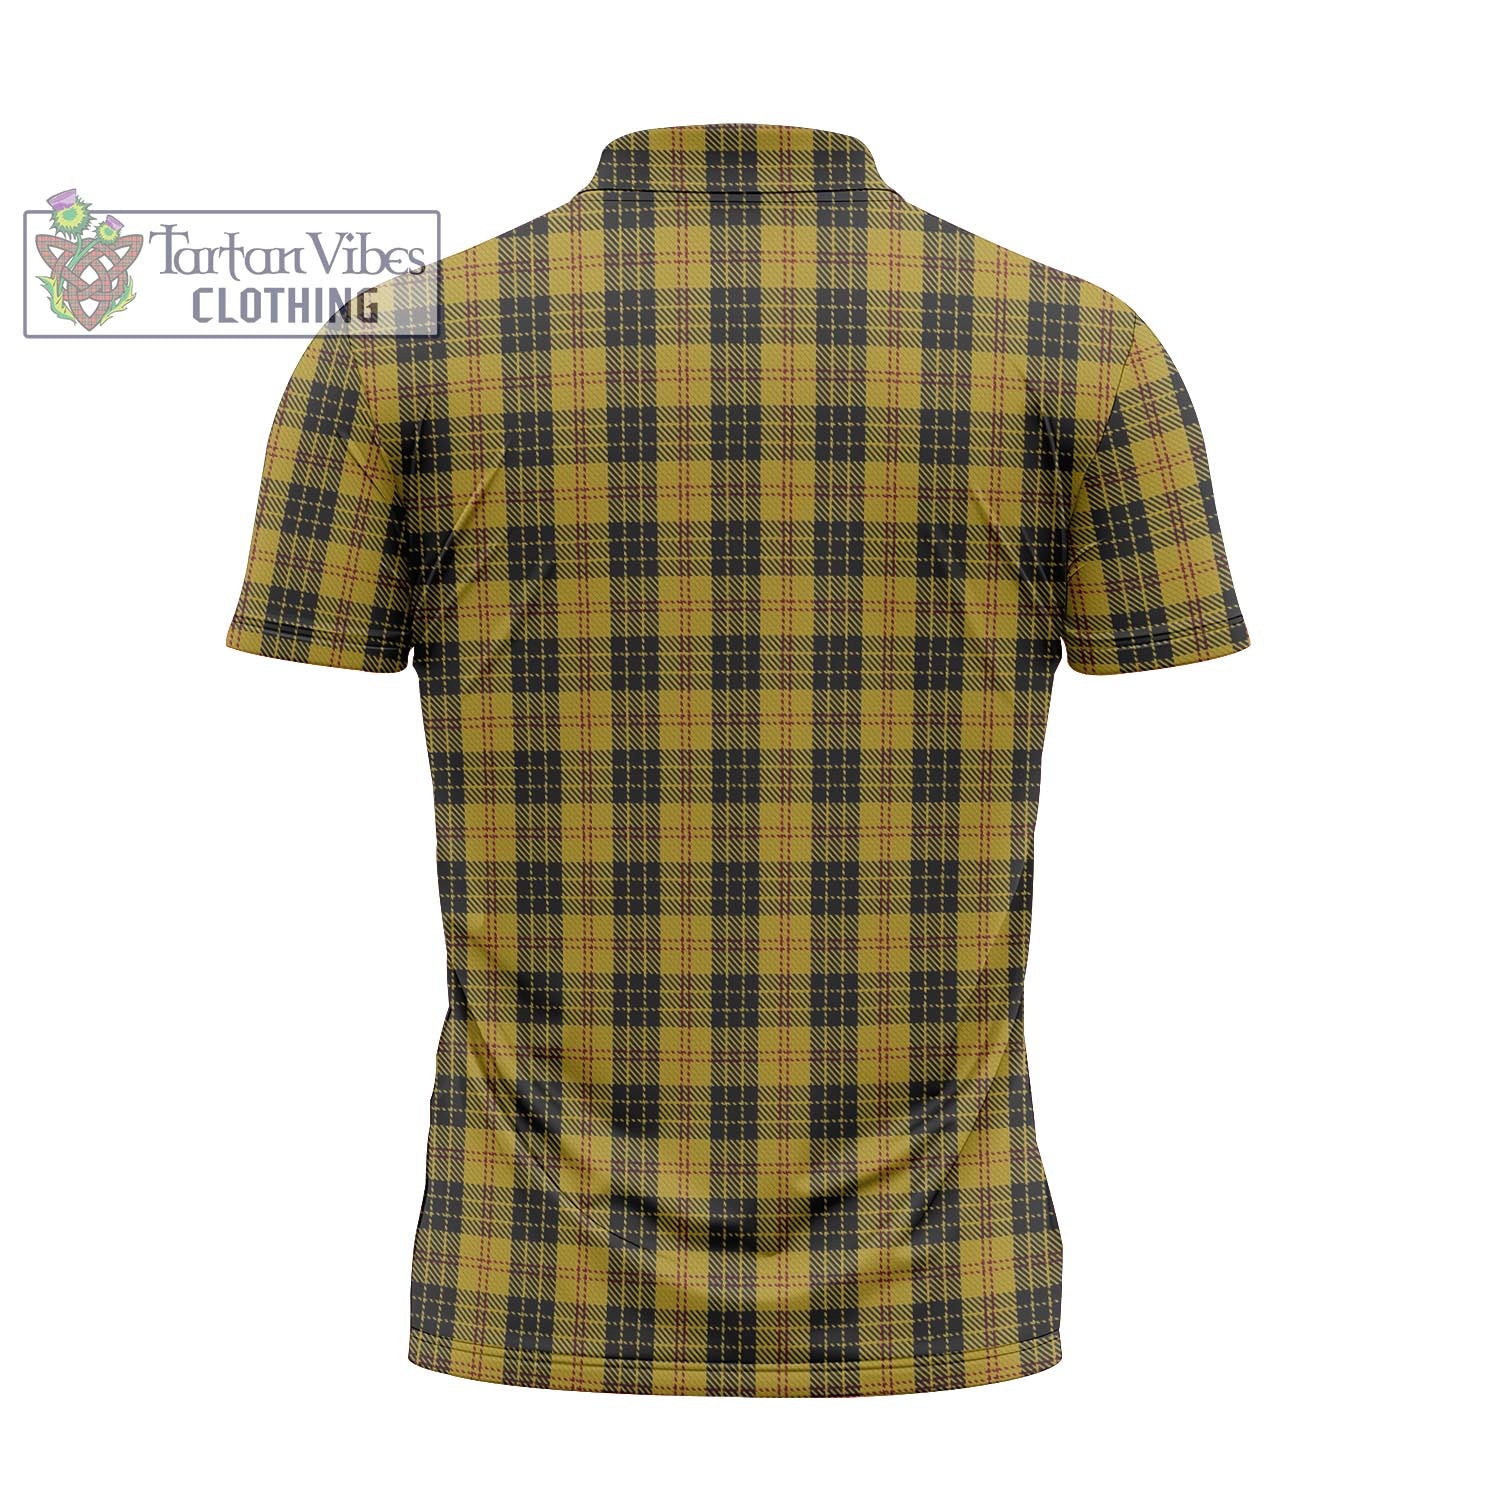 Tartan Vibes Clothing MacLeod Tartan Zipper Polo Shirt with Family Crest